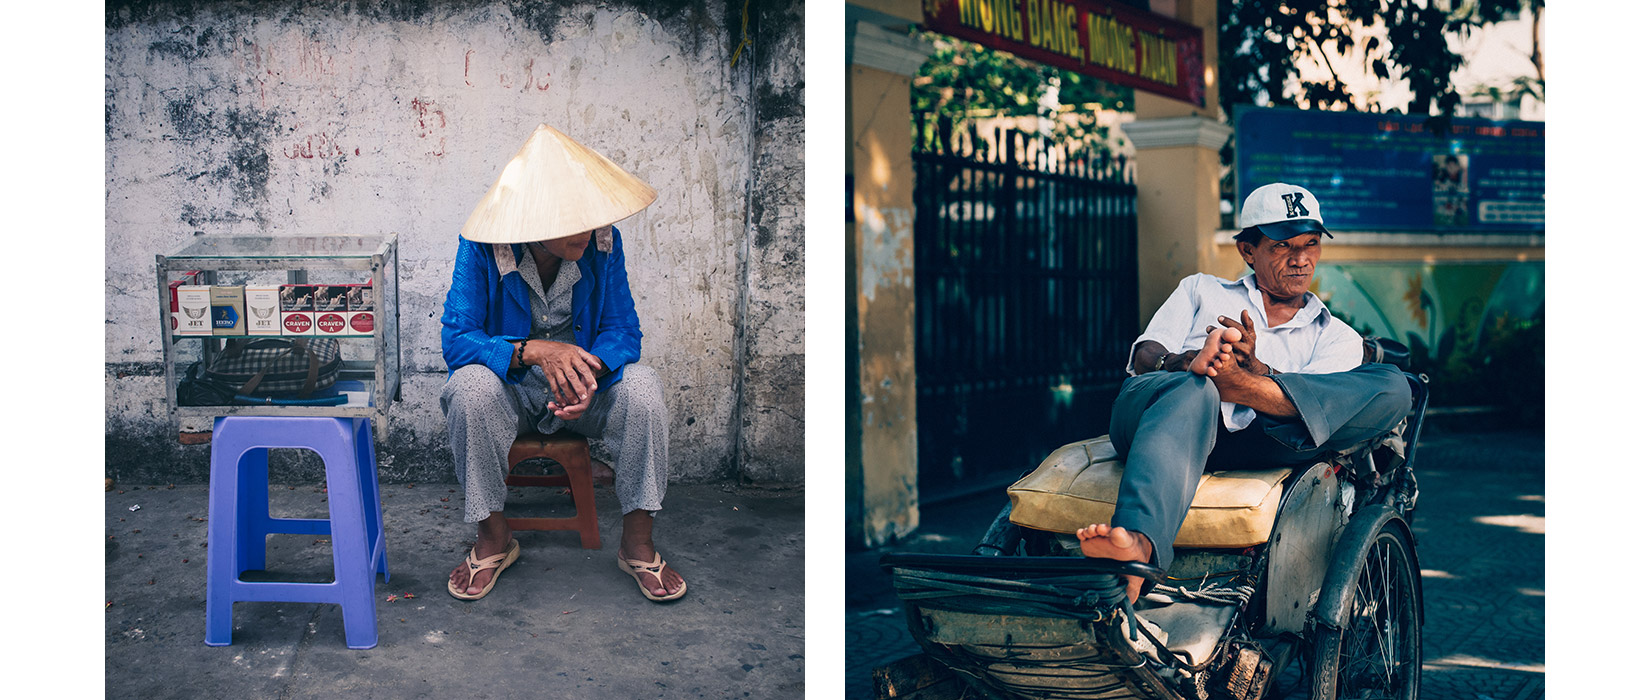 Streets of Saigon by Dominik 